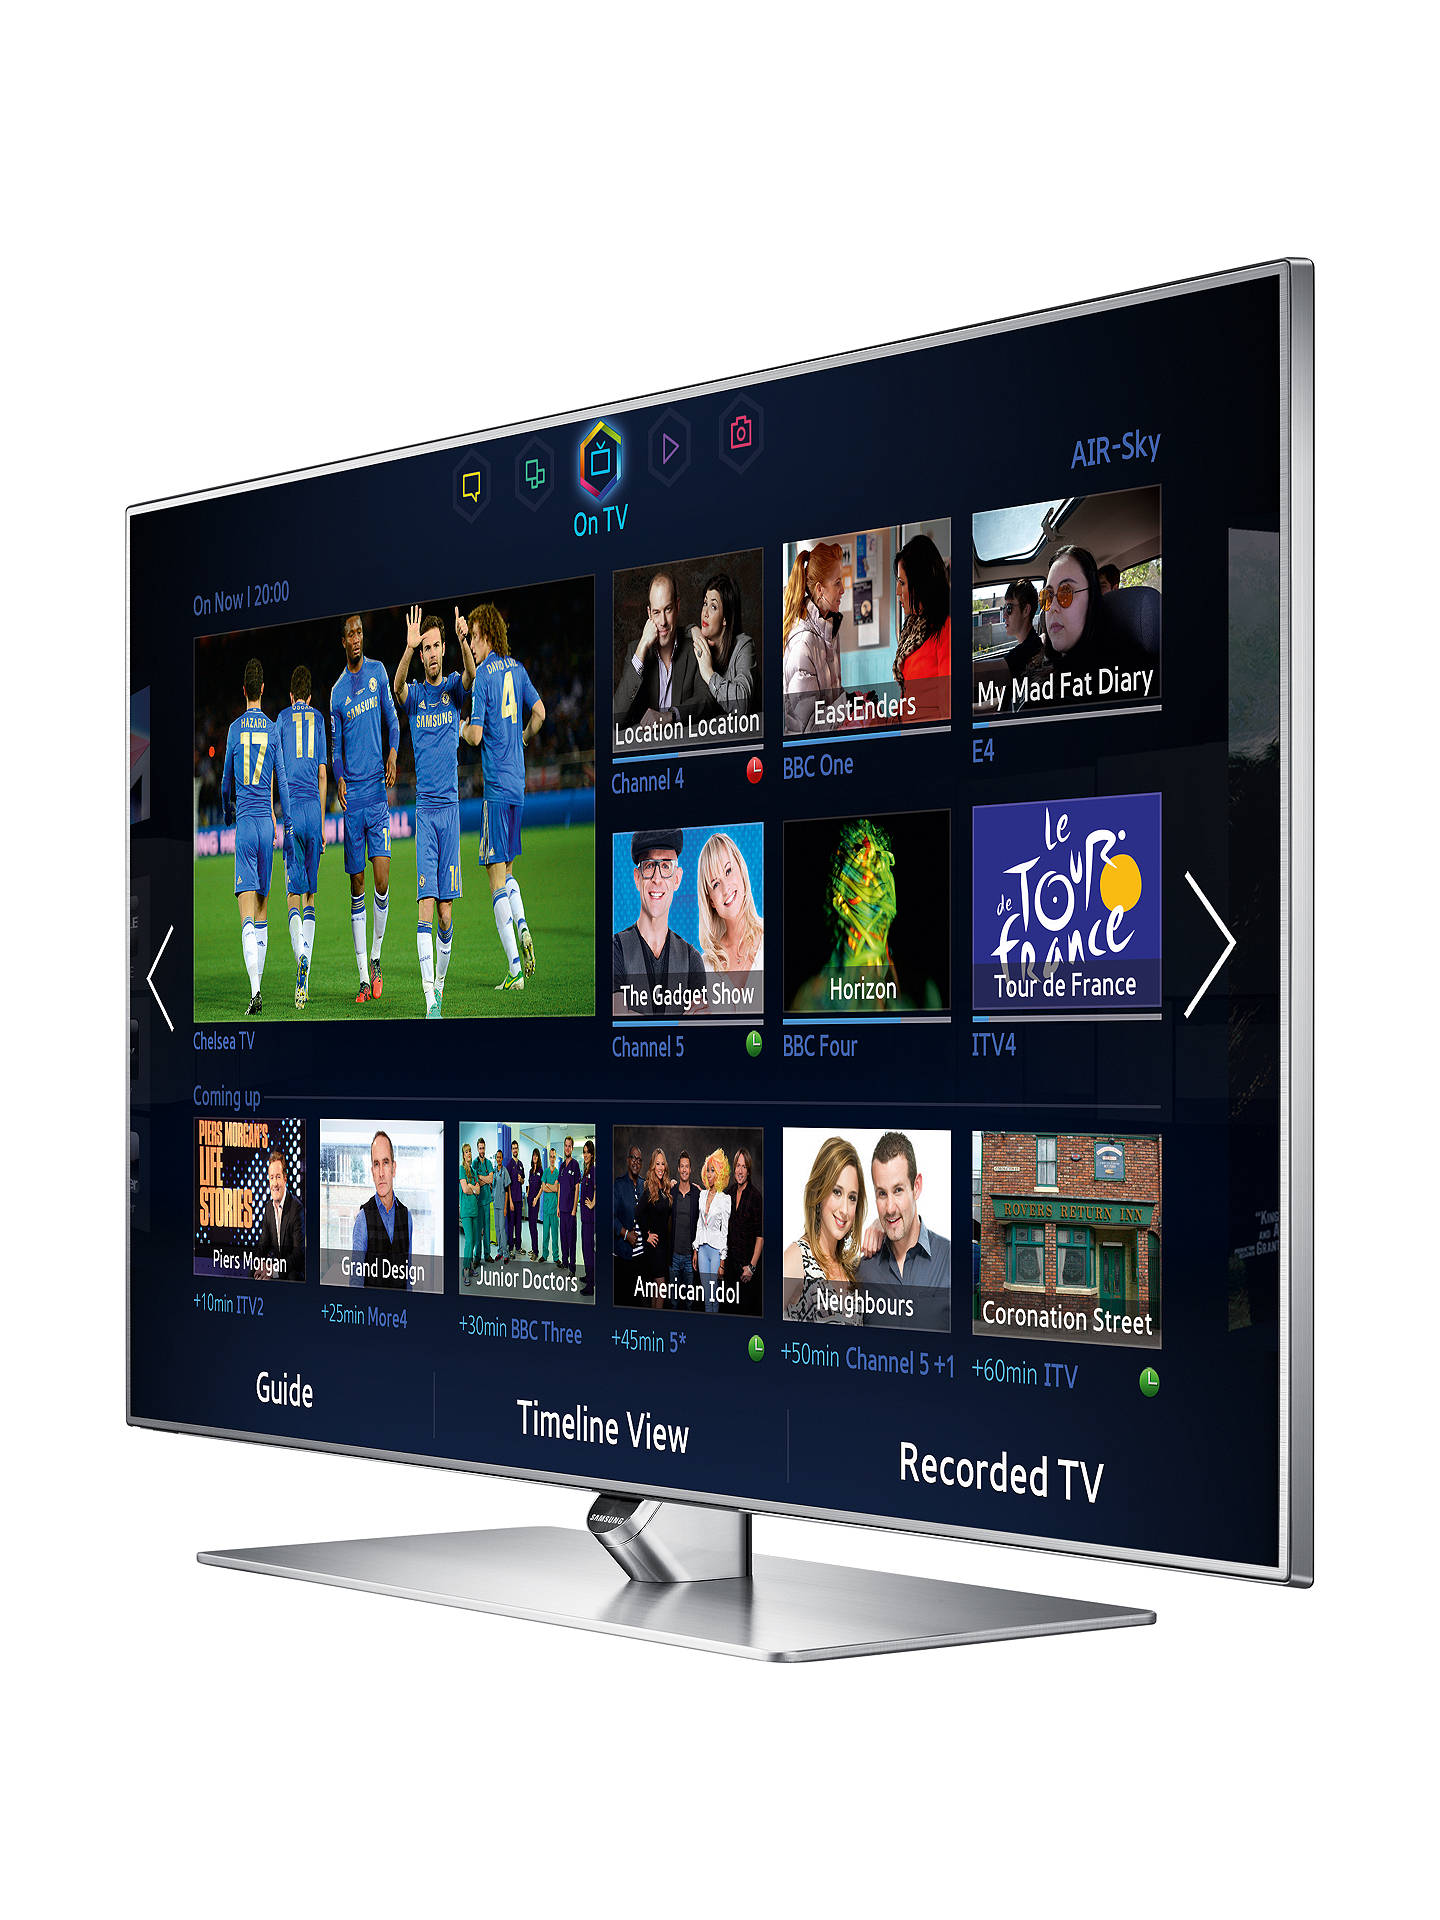 Samsung UE40F7000 LED HD 1080p 3D Smart TV, 40" with ...